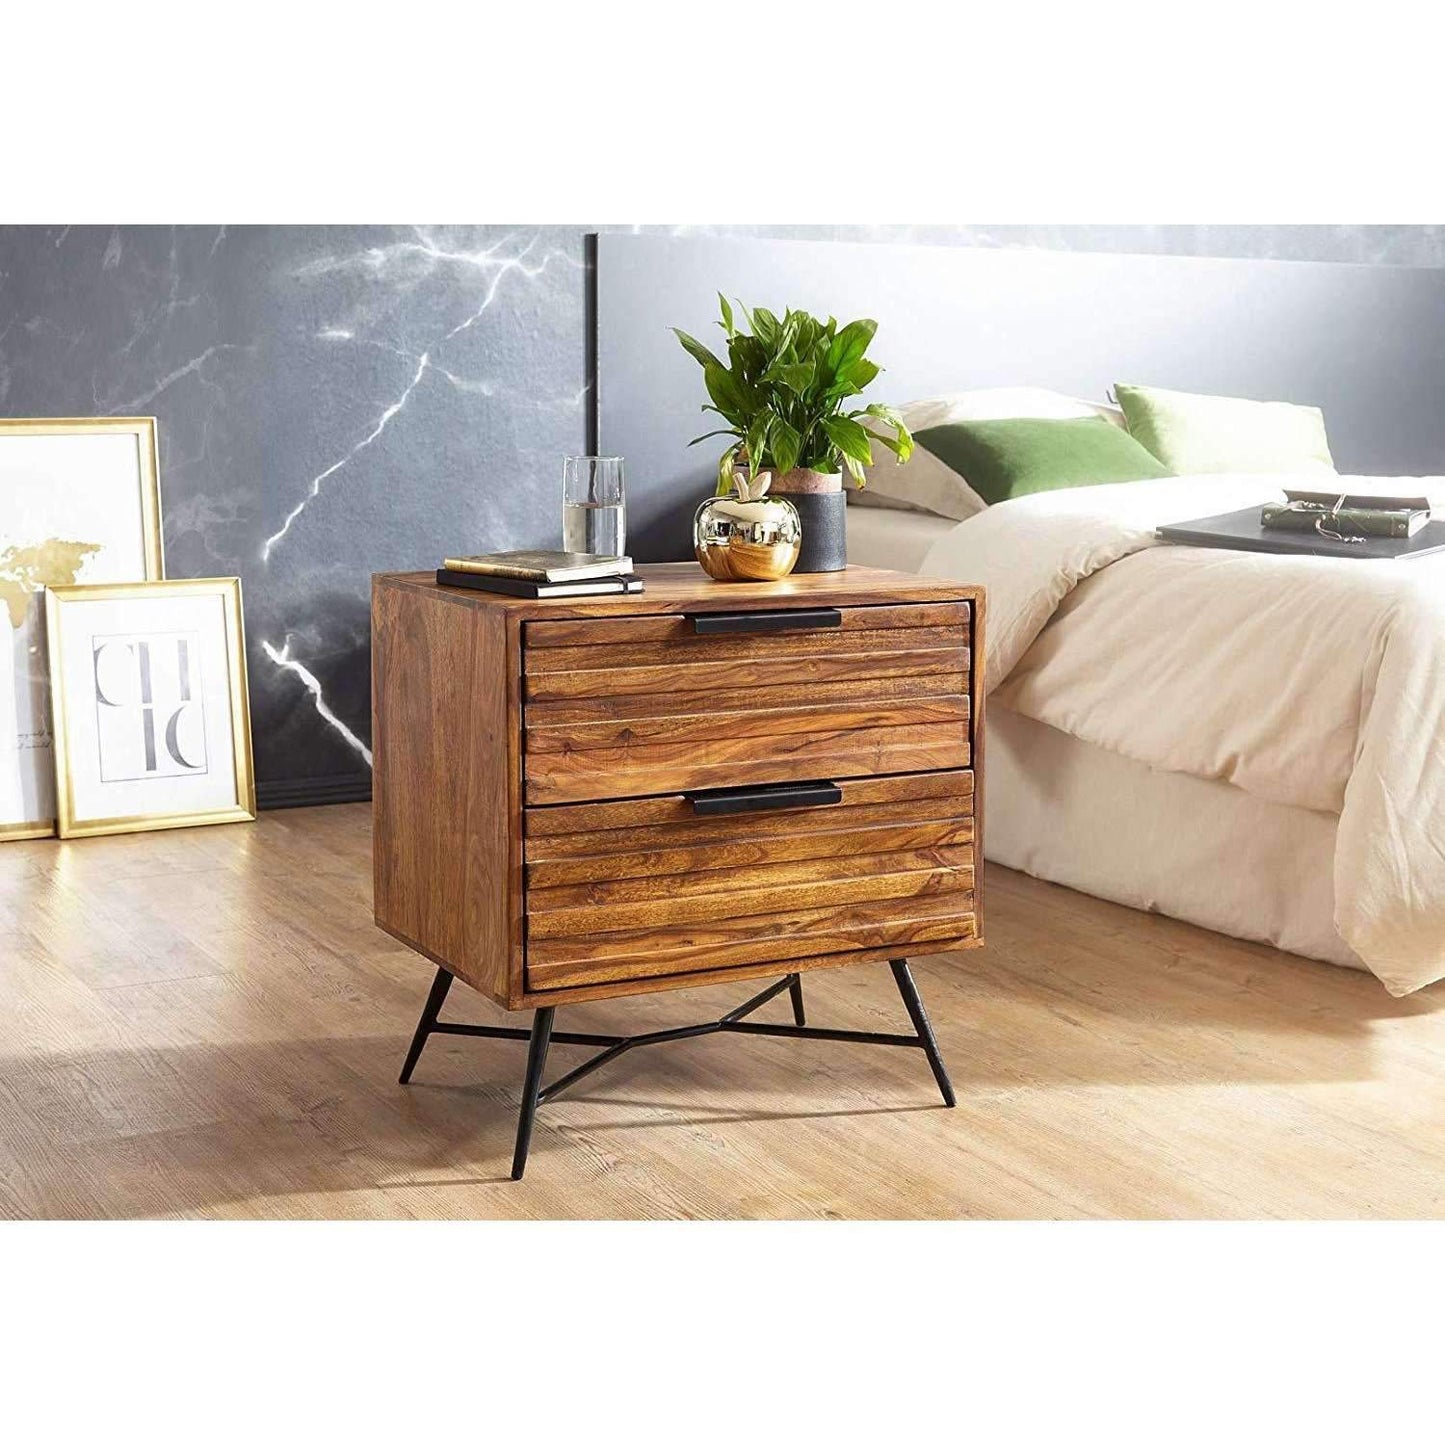 Nancy's Modern Bedside Table - Solid Wood Bedside Table - Sheesham - Industrial - 60 x 60 x 40 cm